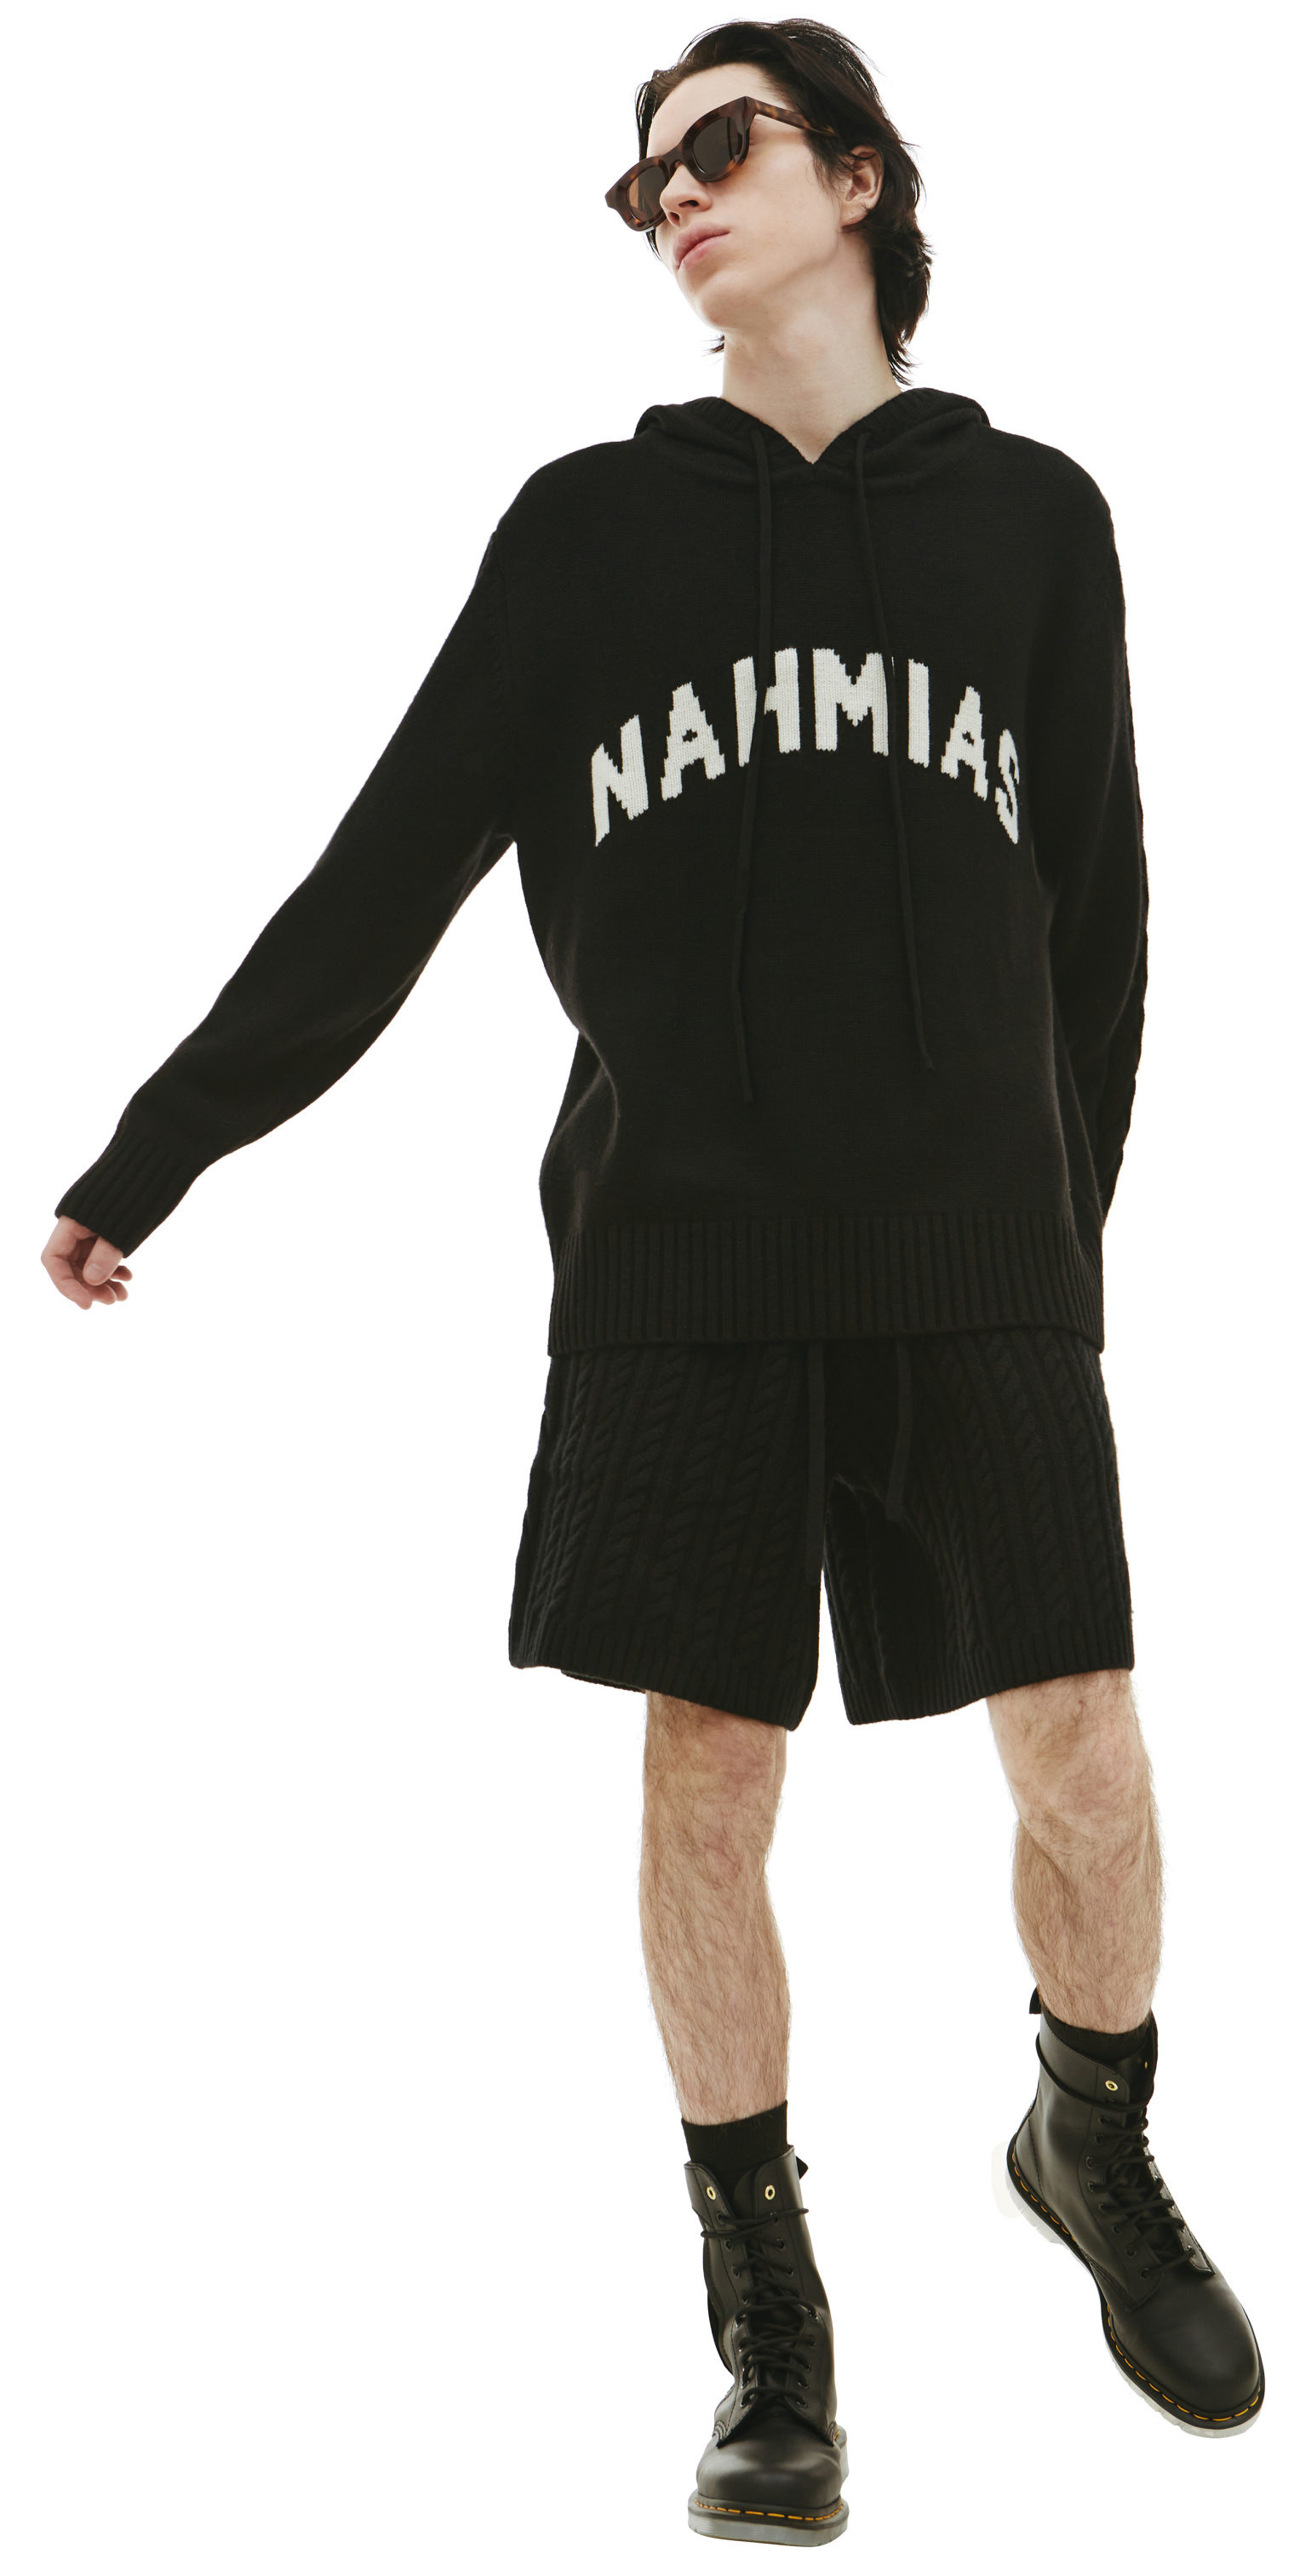 Nahmias Knit logo hoodie